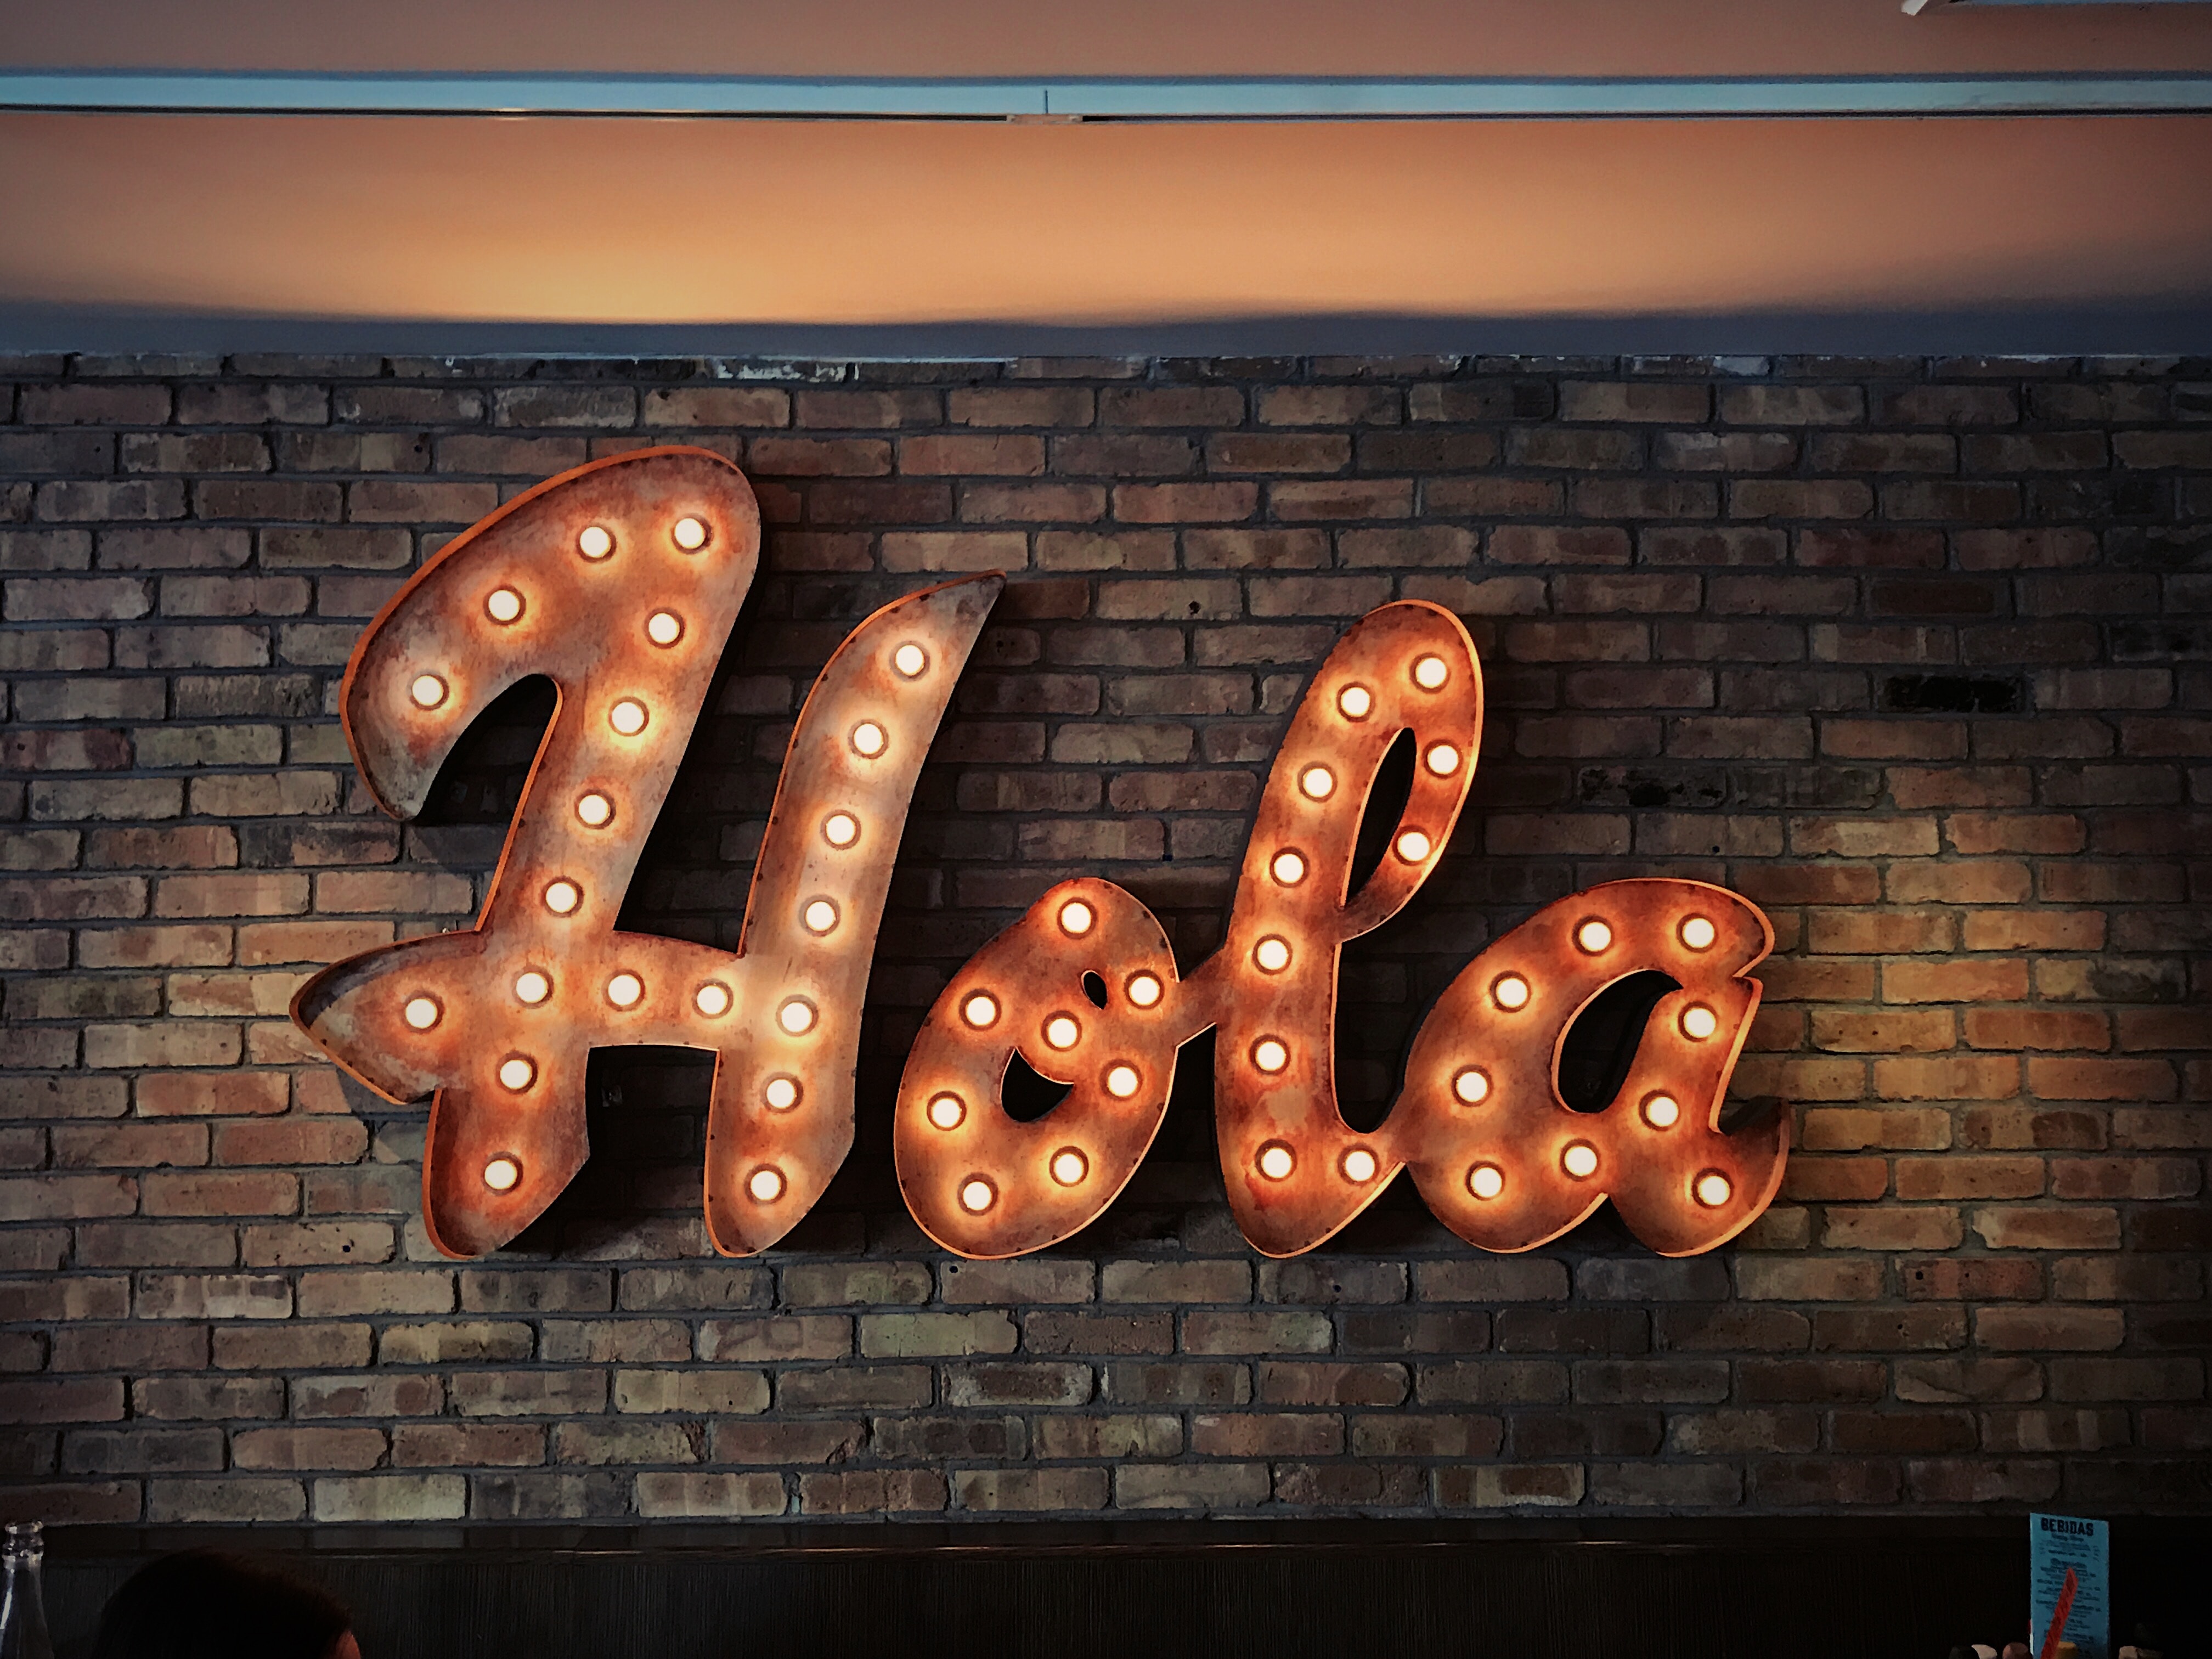 an artistic illuminated metal sign saying "Hola" 